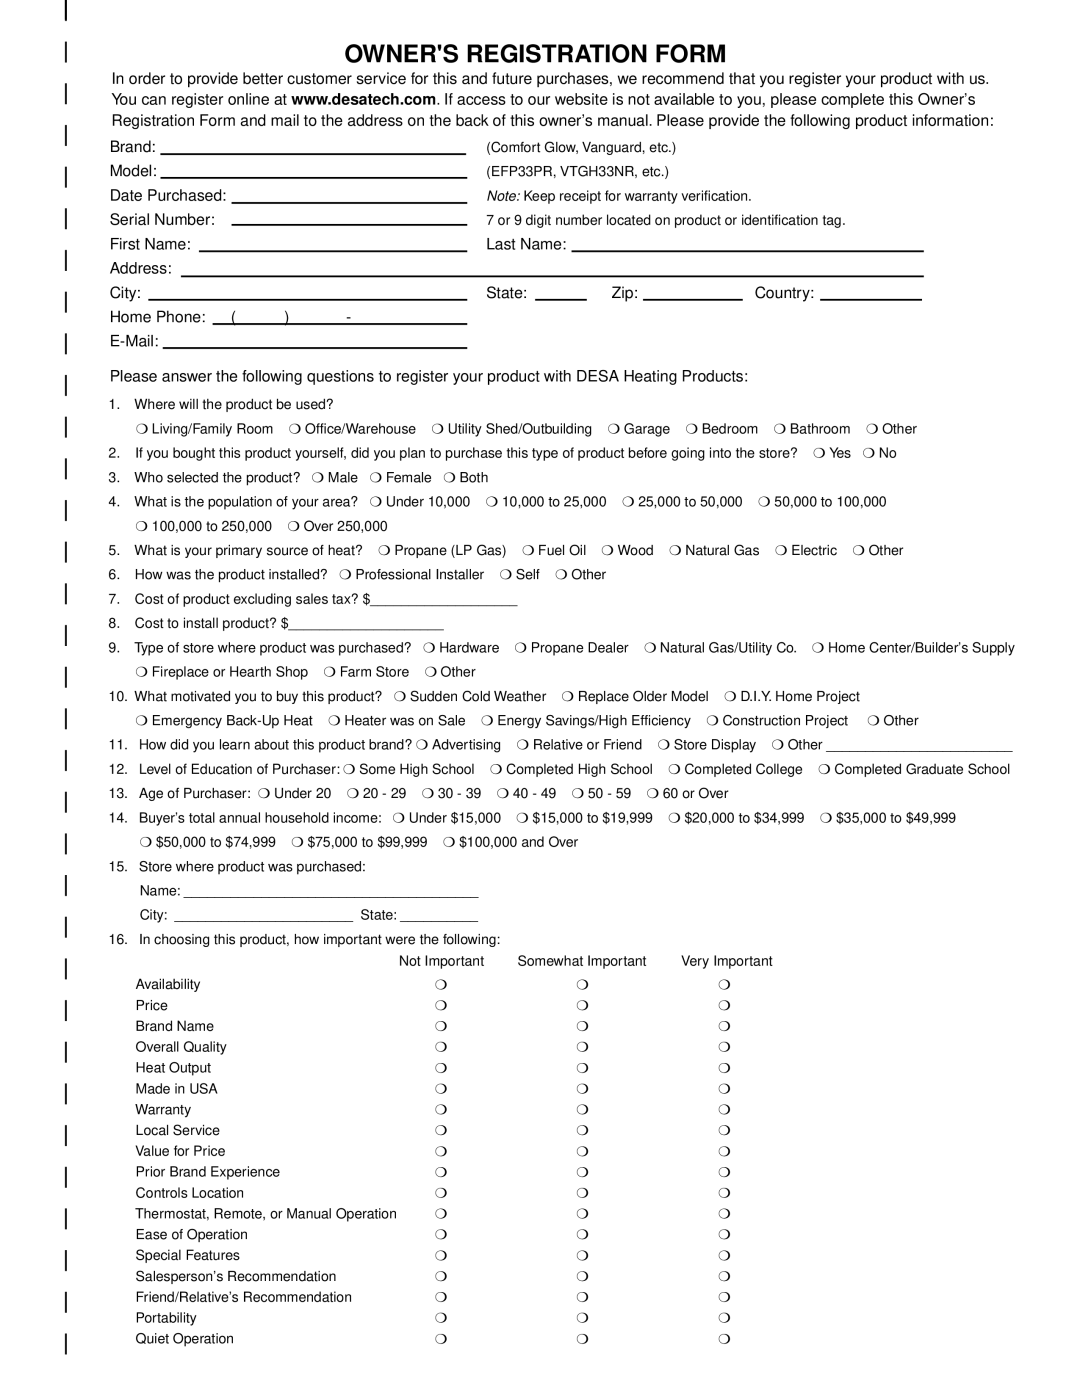 Desa LSL3124N installation manual Owners Registration Form 